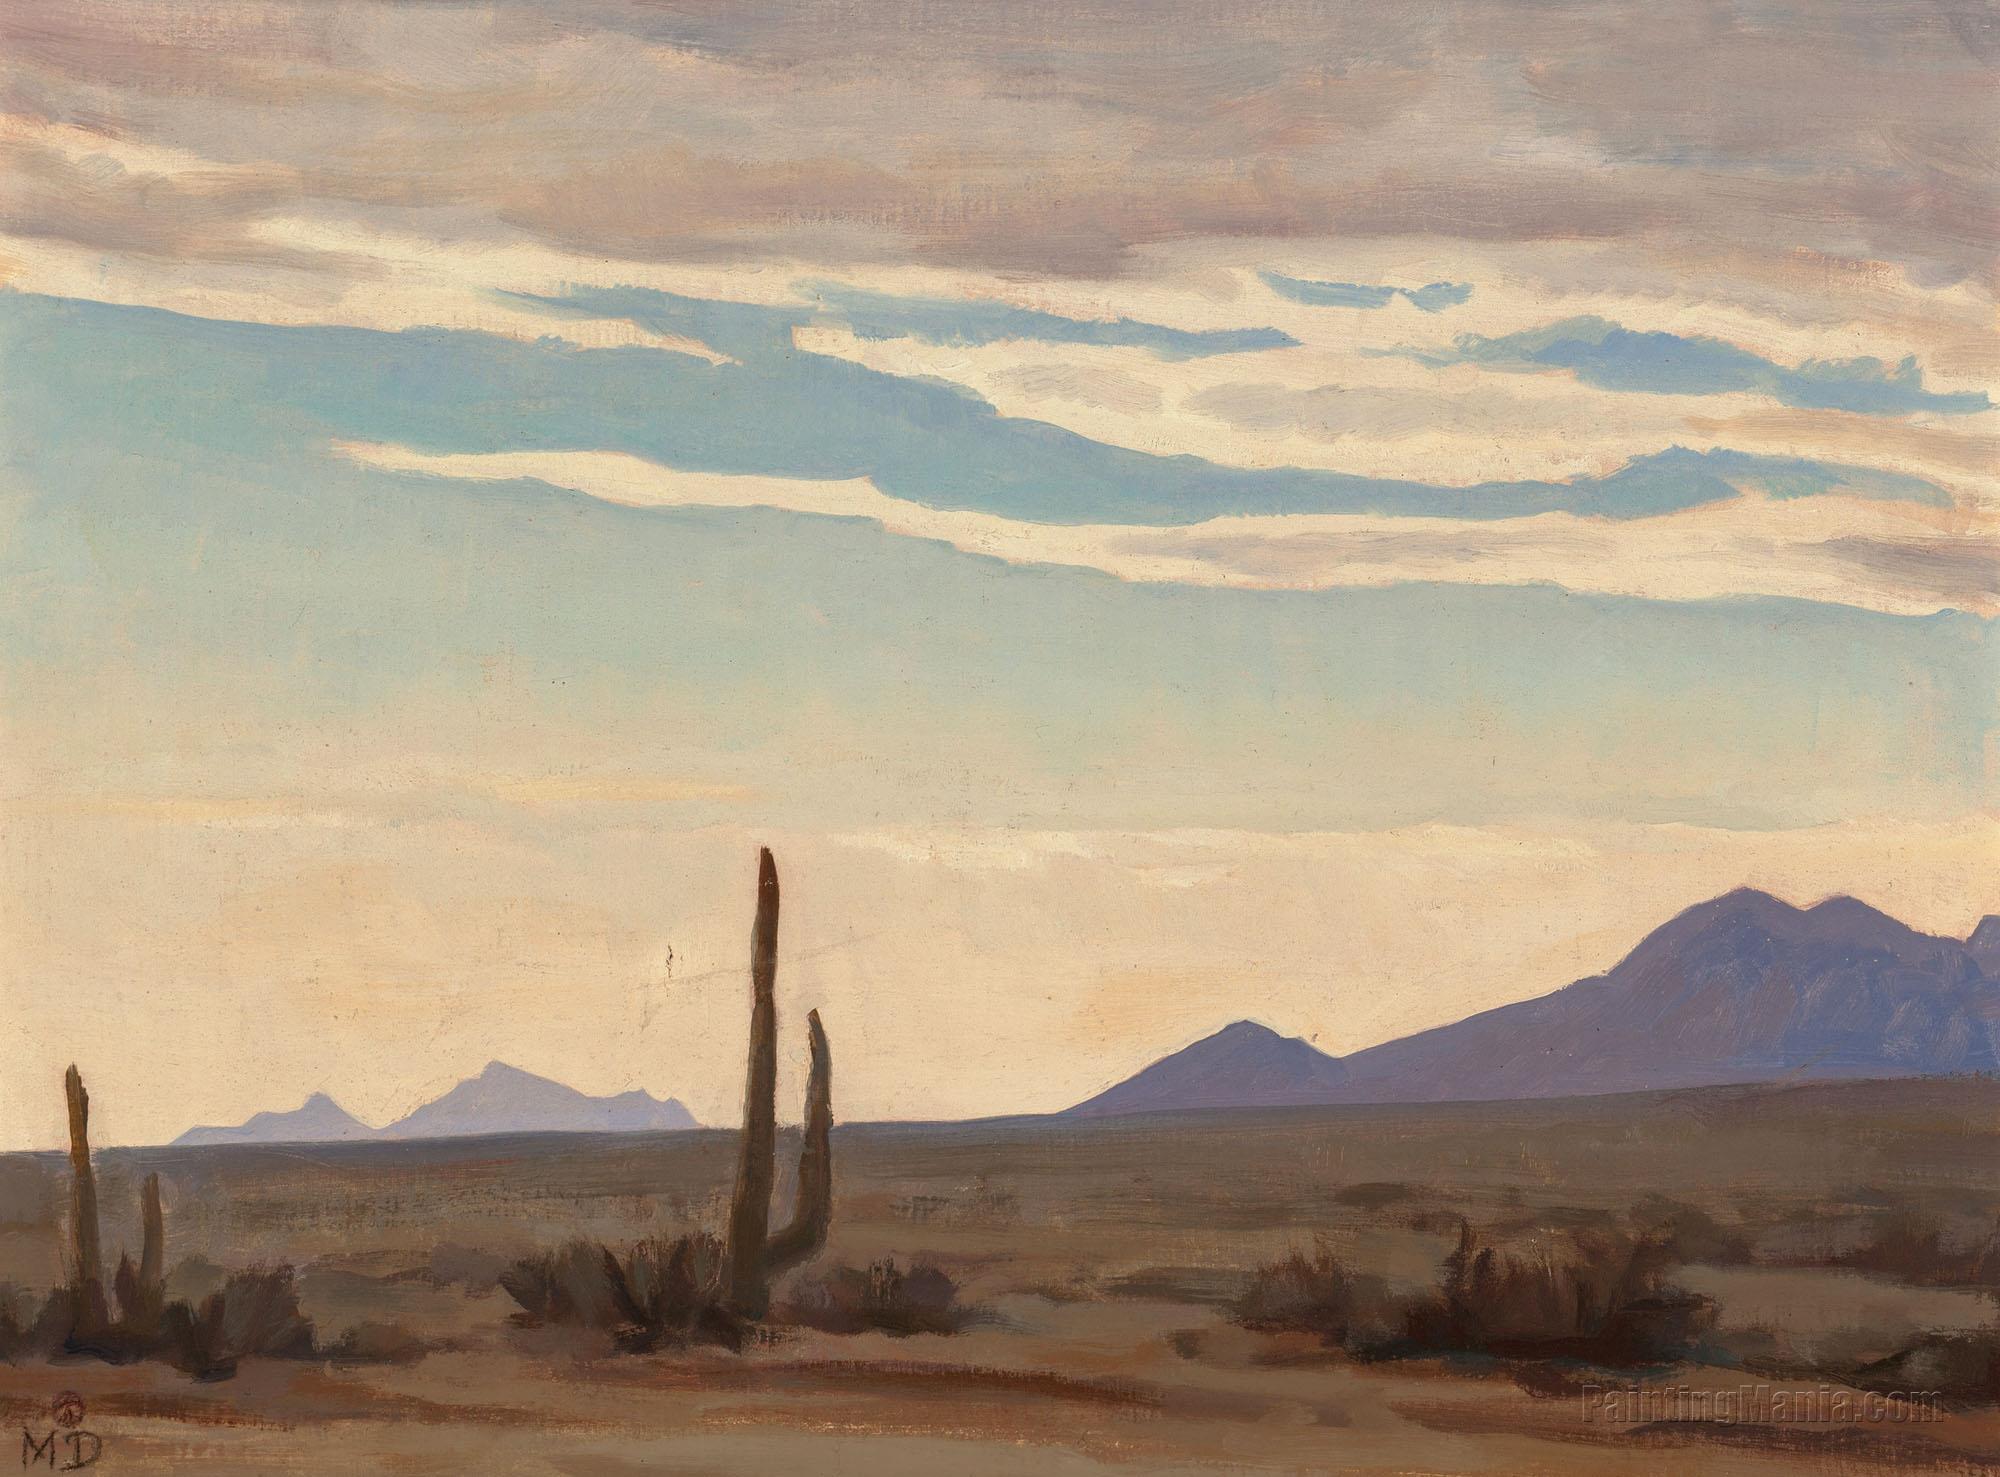 Desert Sky at Evening, Tucson, Arizona